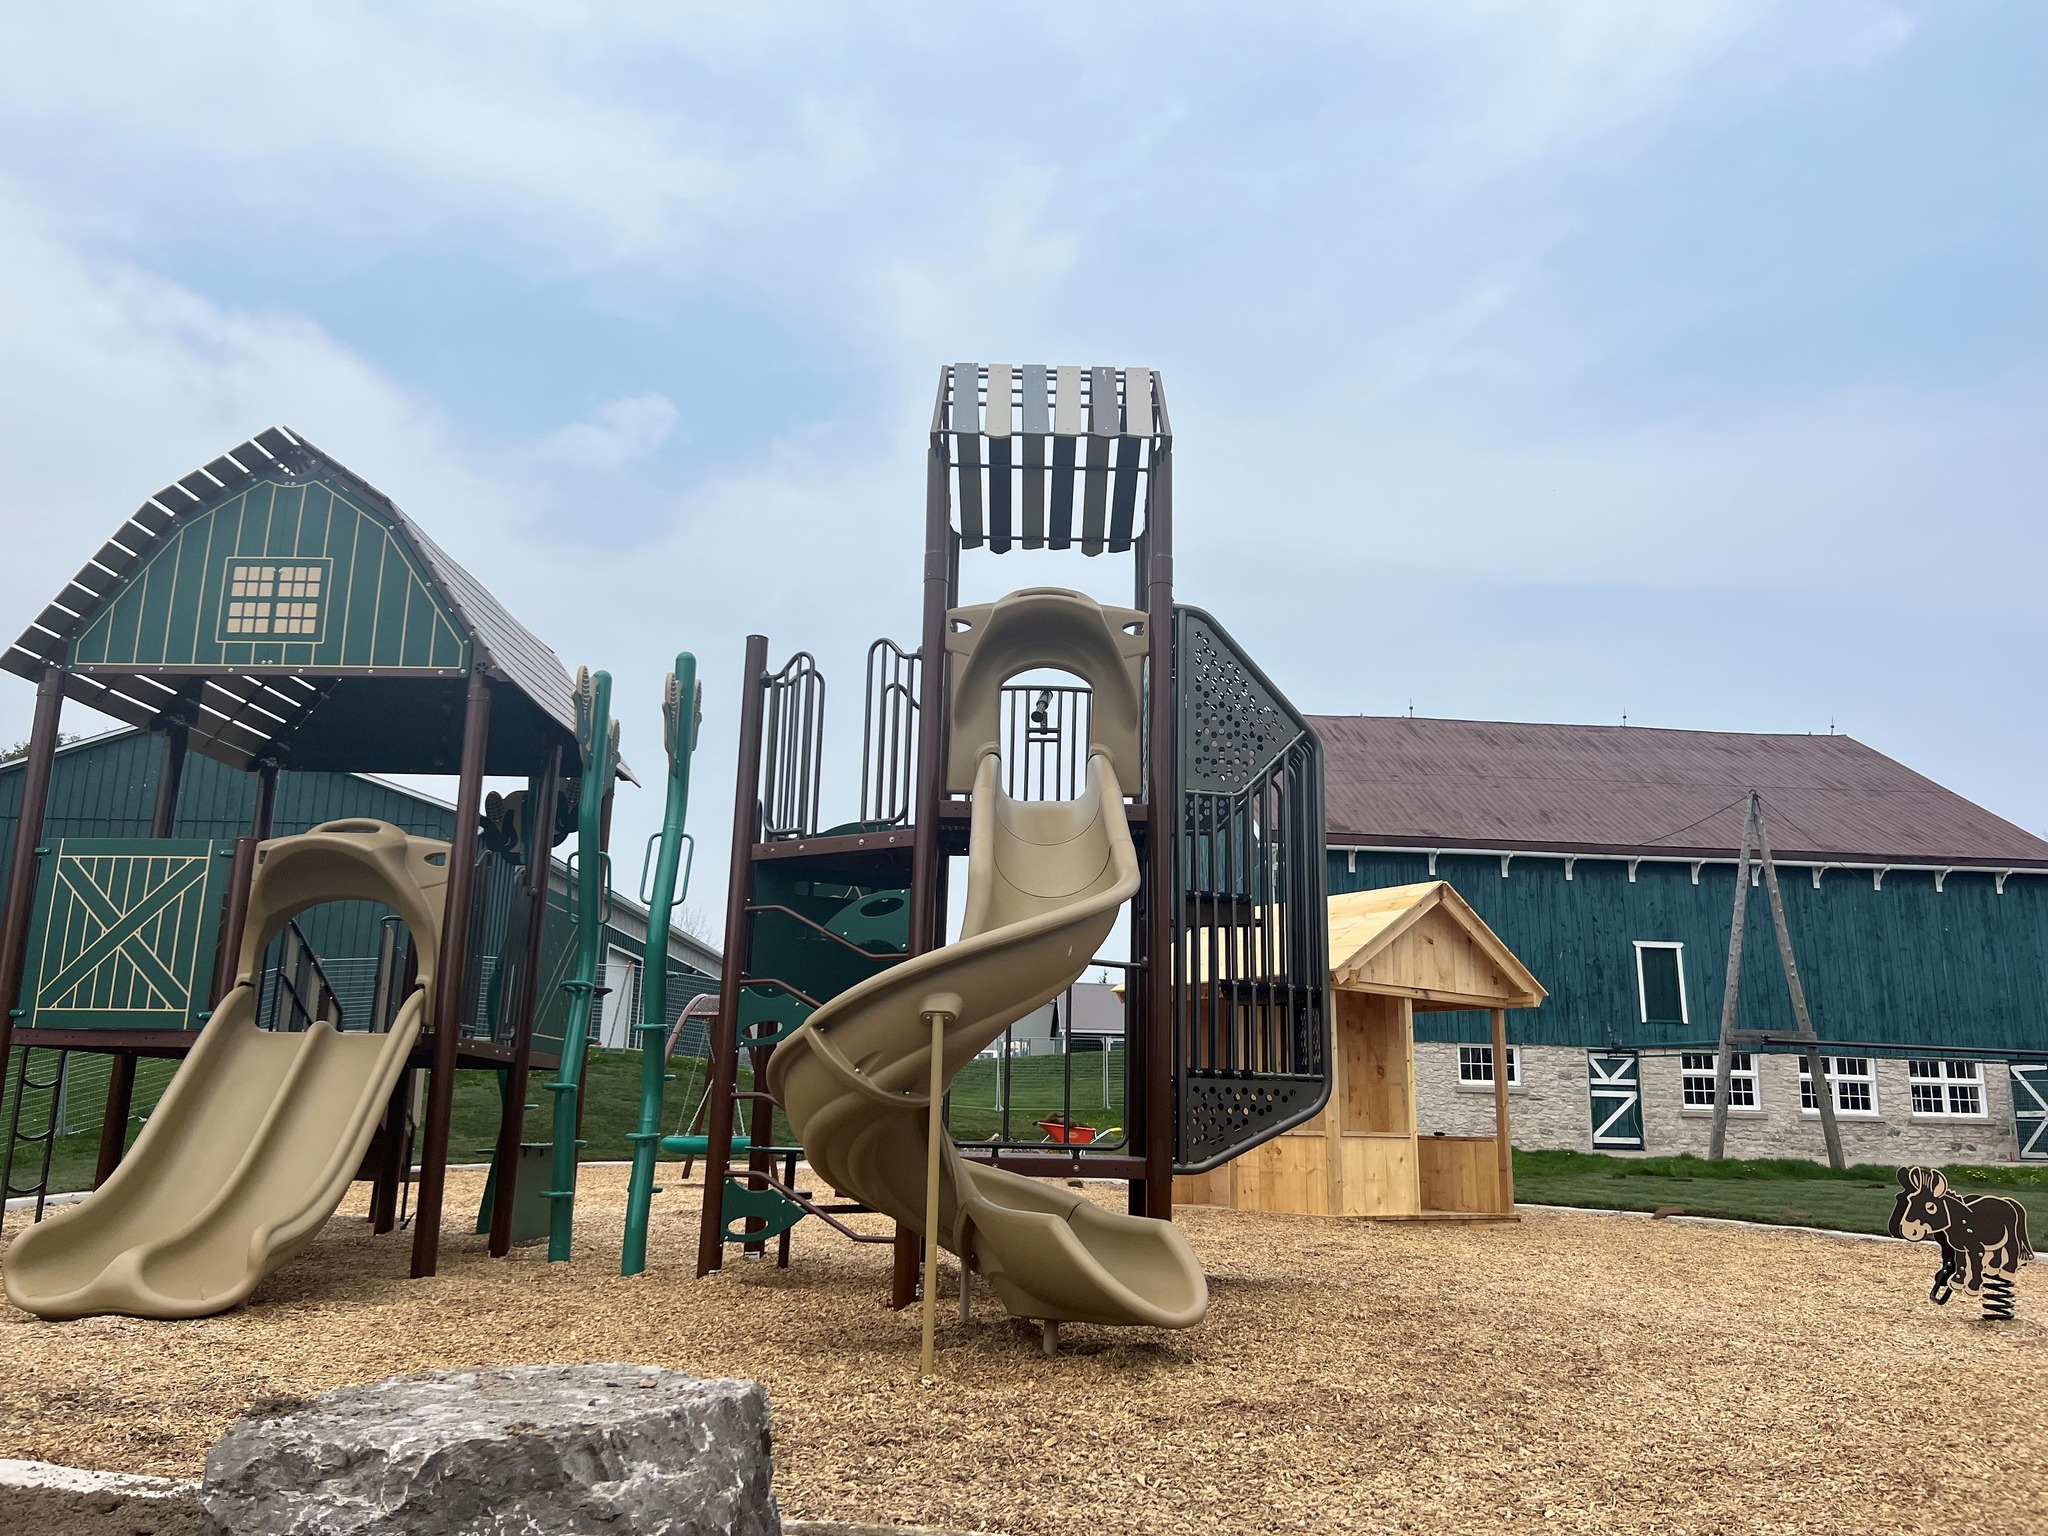 wellington county museum opens new playground